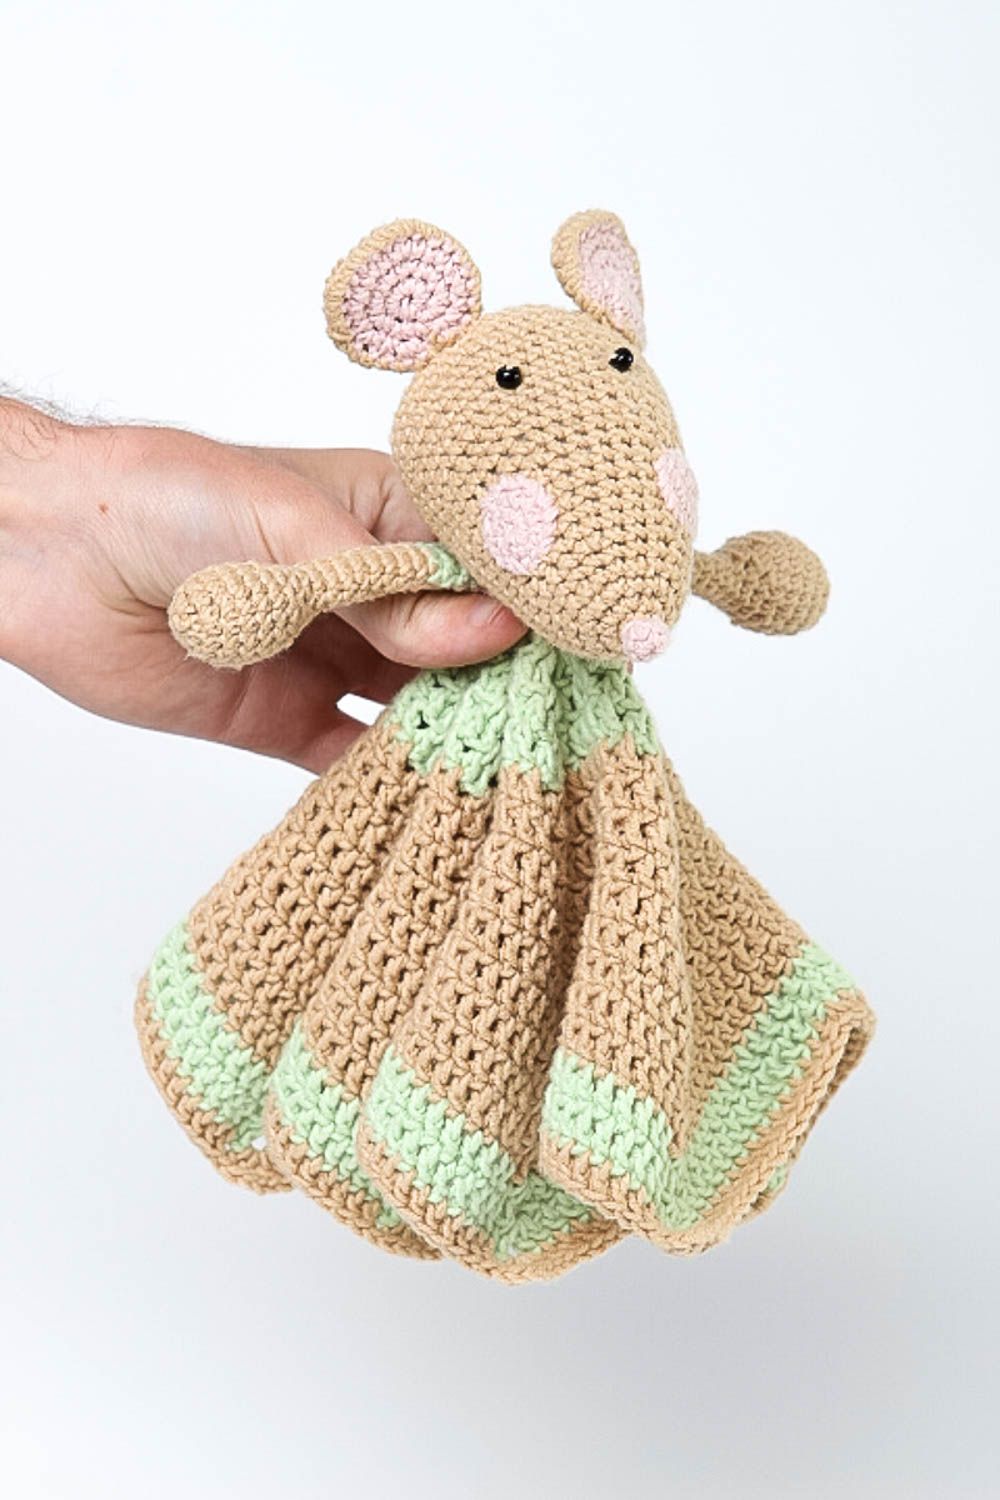 Handmade crocheted toy for babies nursery decor ideas stuffed toy for children photo 5